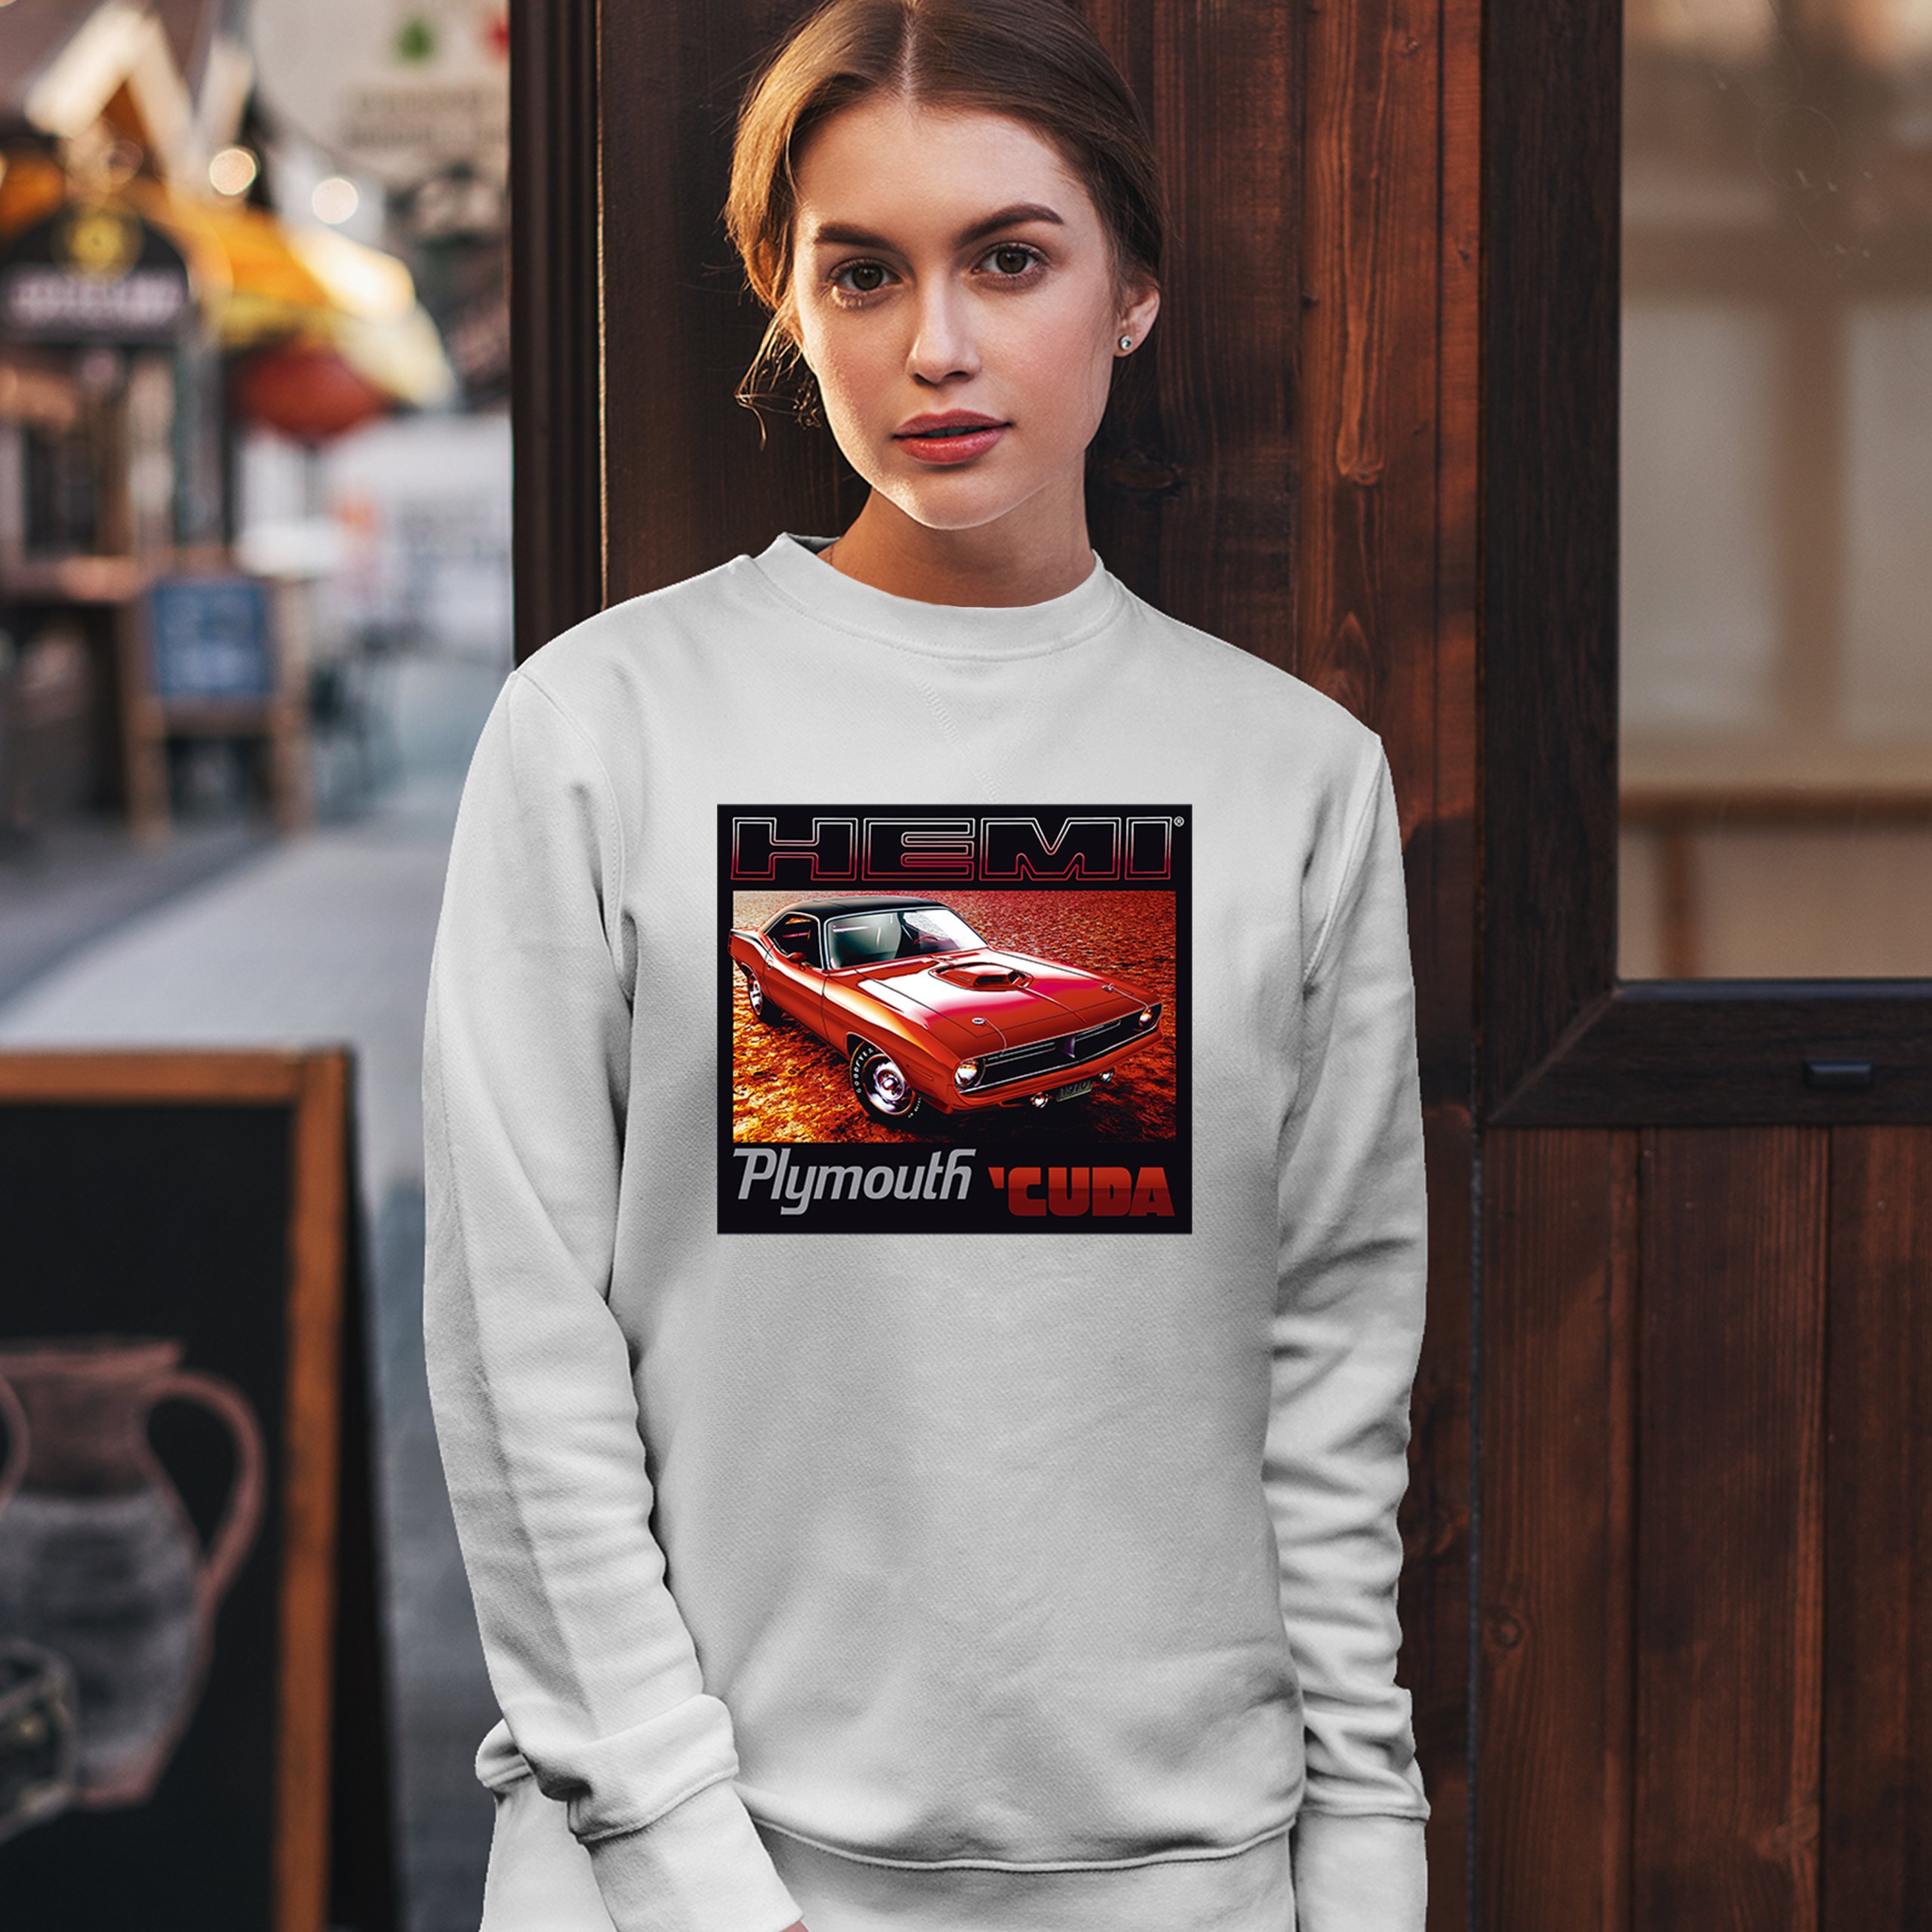 Hemi Plymouth 'Cuda Sweatshirt American Retro Muscle Car Licensed ...